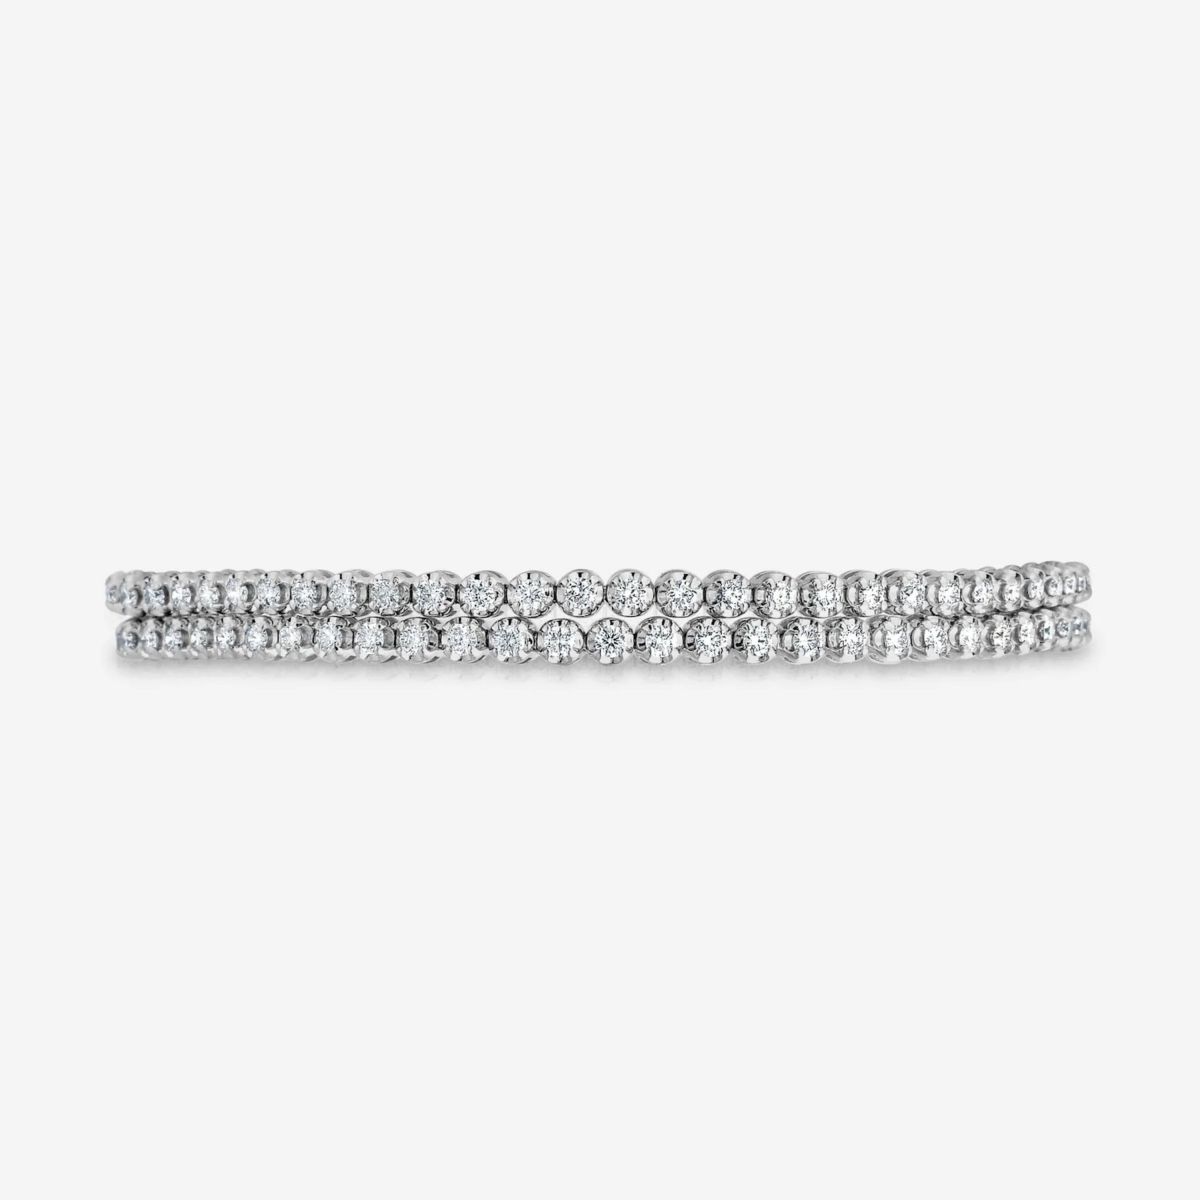 Diamond bracelet shopping